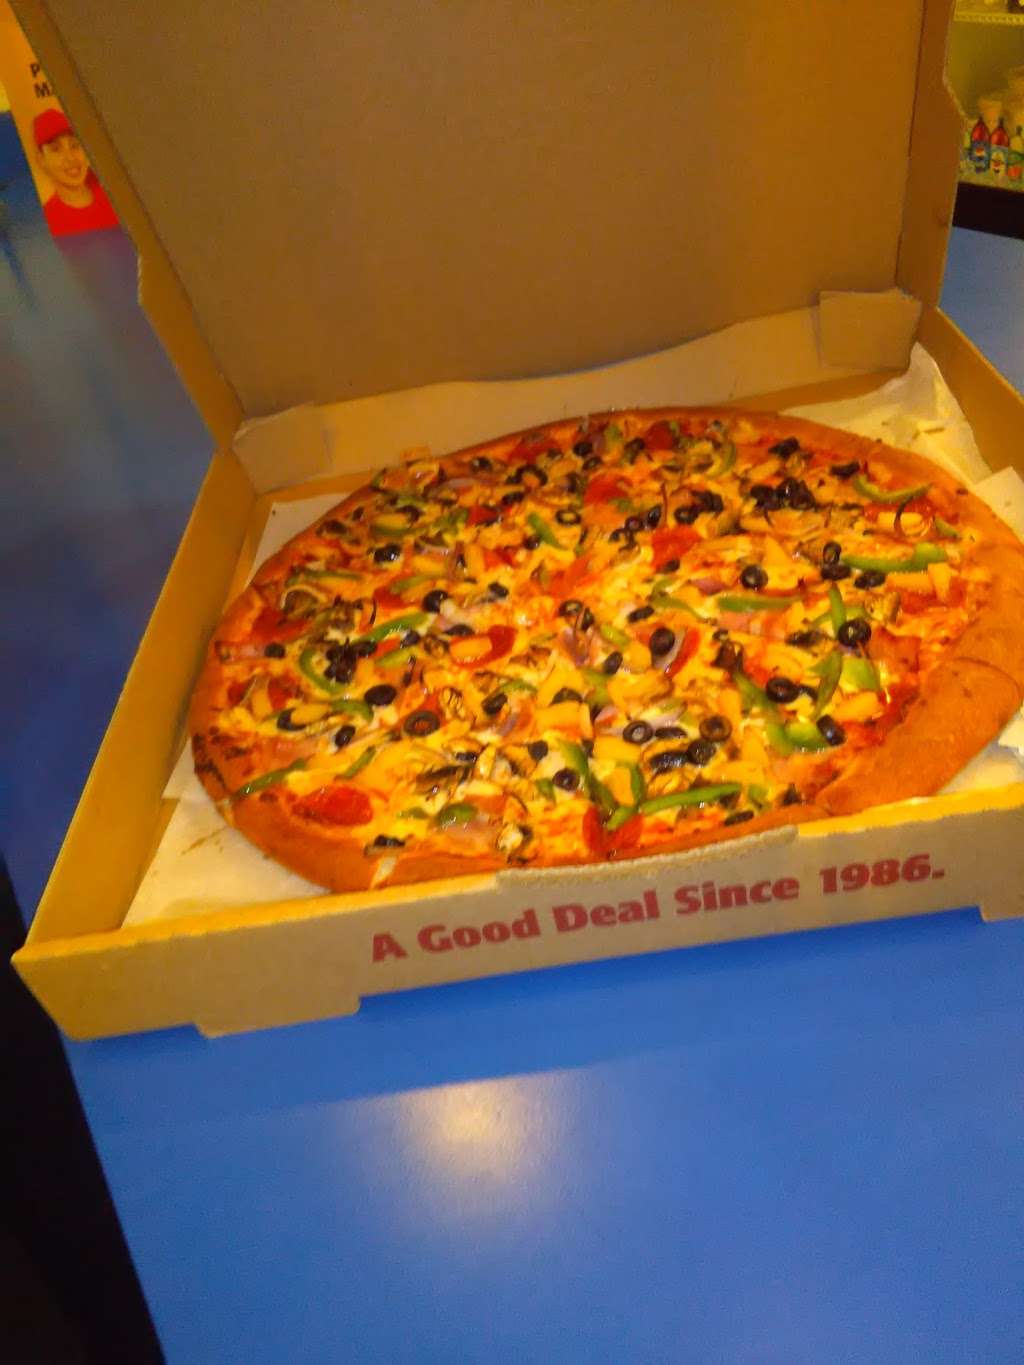 Pizza Patron | 3400 Lombardy Ln #104, Dallas, TX 75220 | Phone: (214) 358-0733